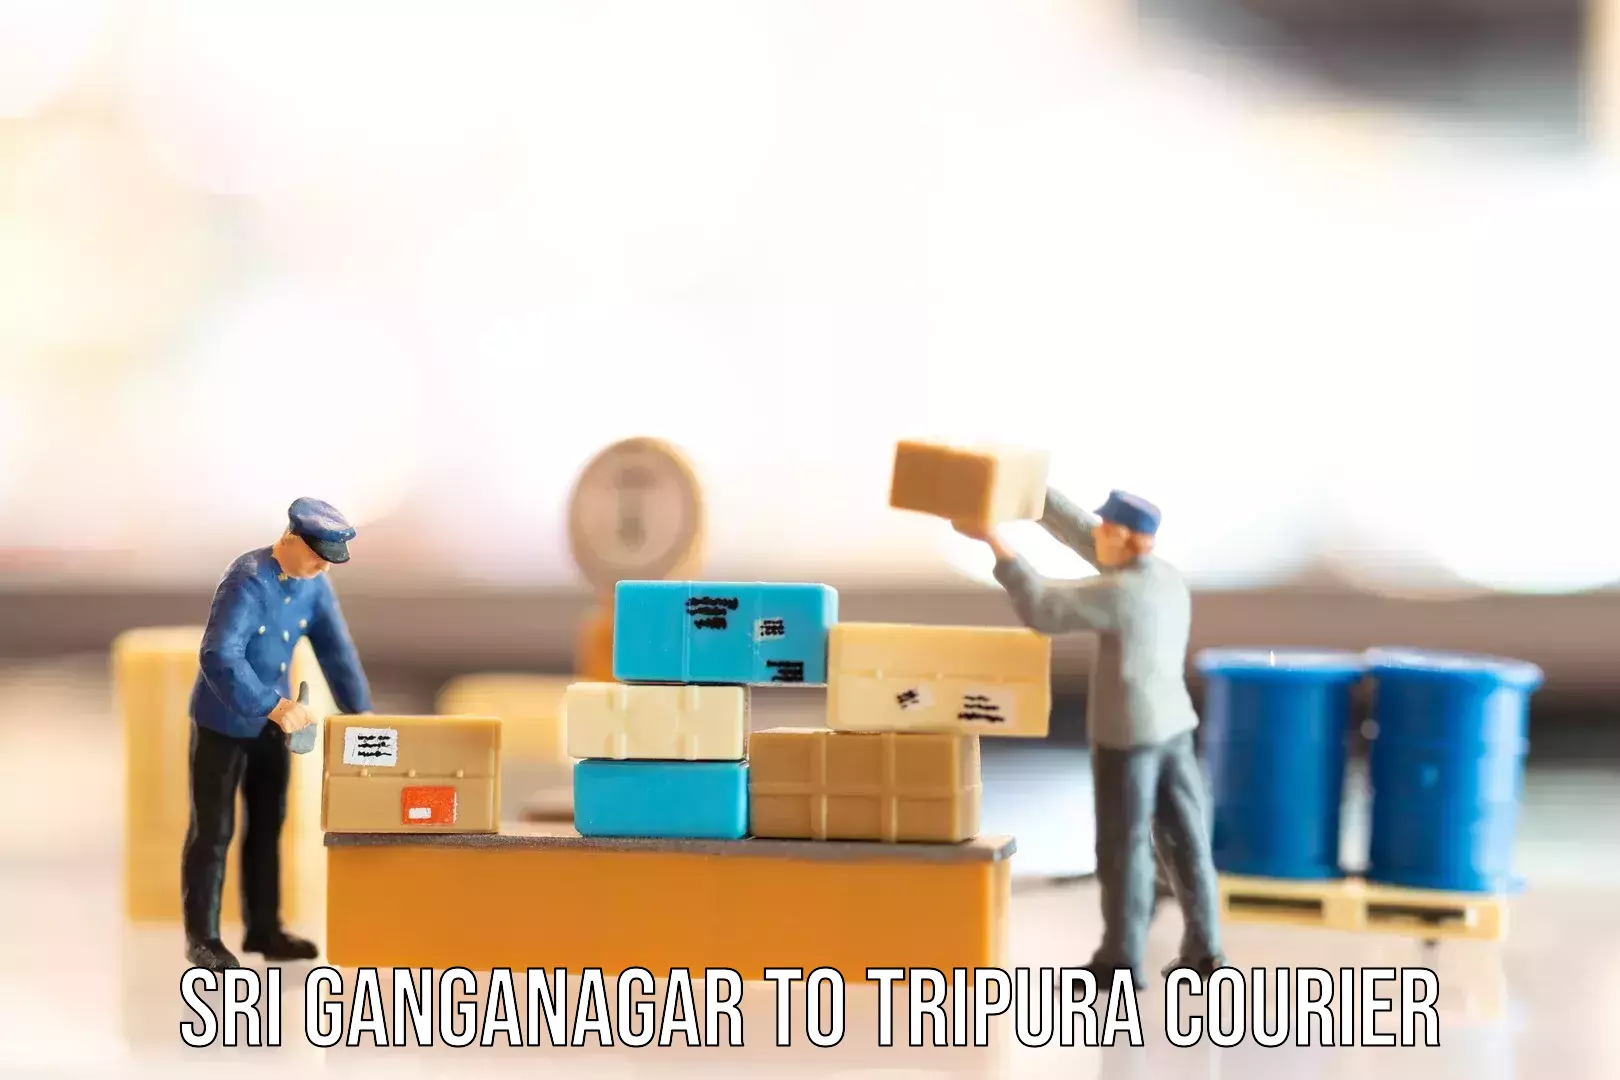 Luggage shipping discounts Sri Ganganagar to Udaipur Tripura